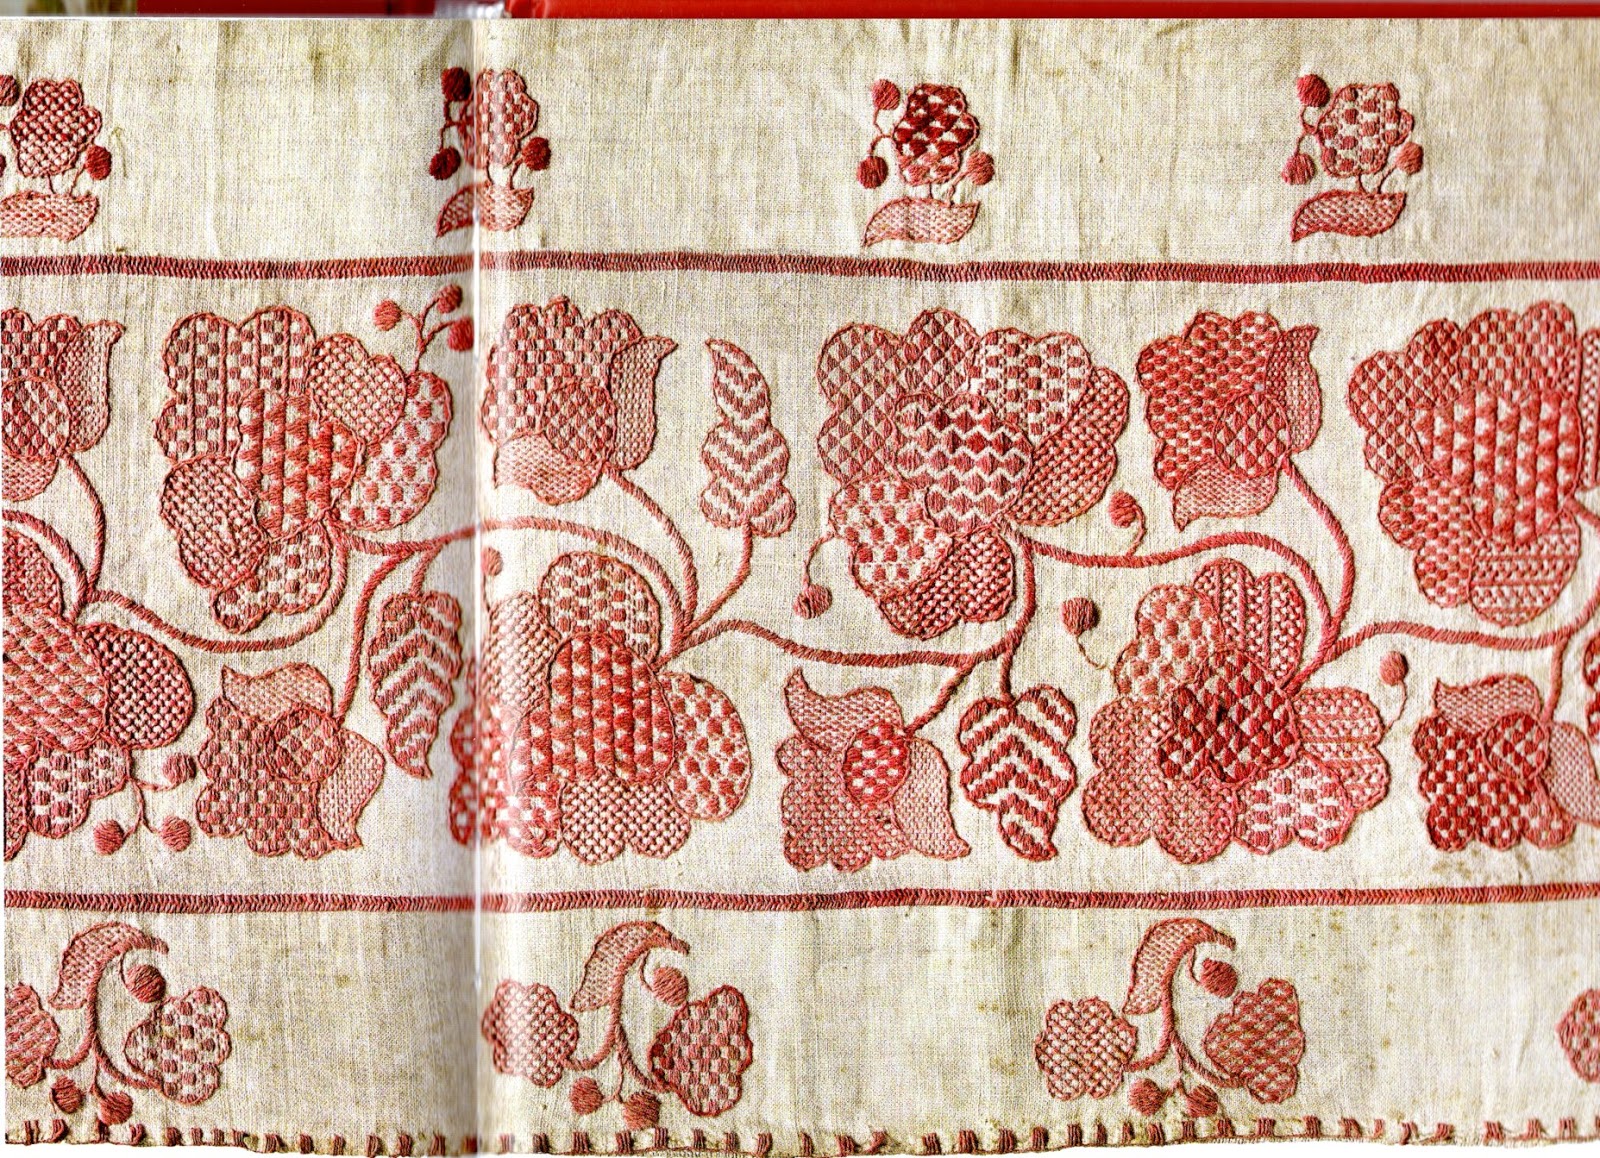 FolkCostume&Embroidery: Central Ukrainian Rushnyk Embroidery